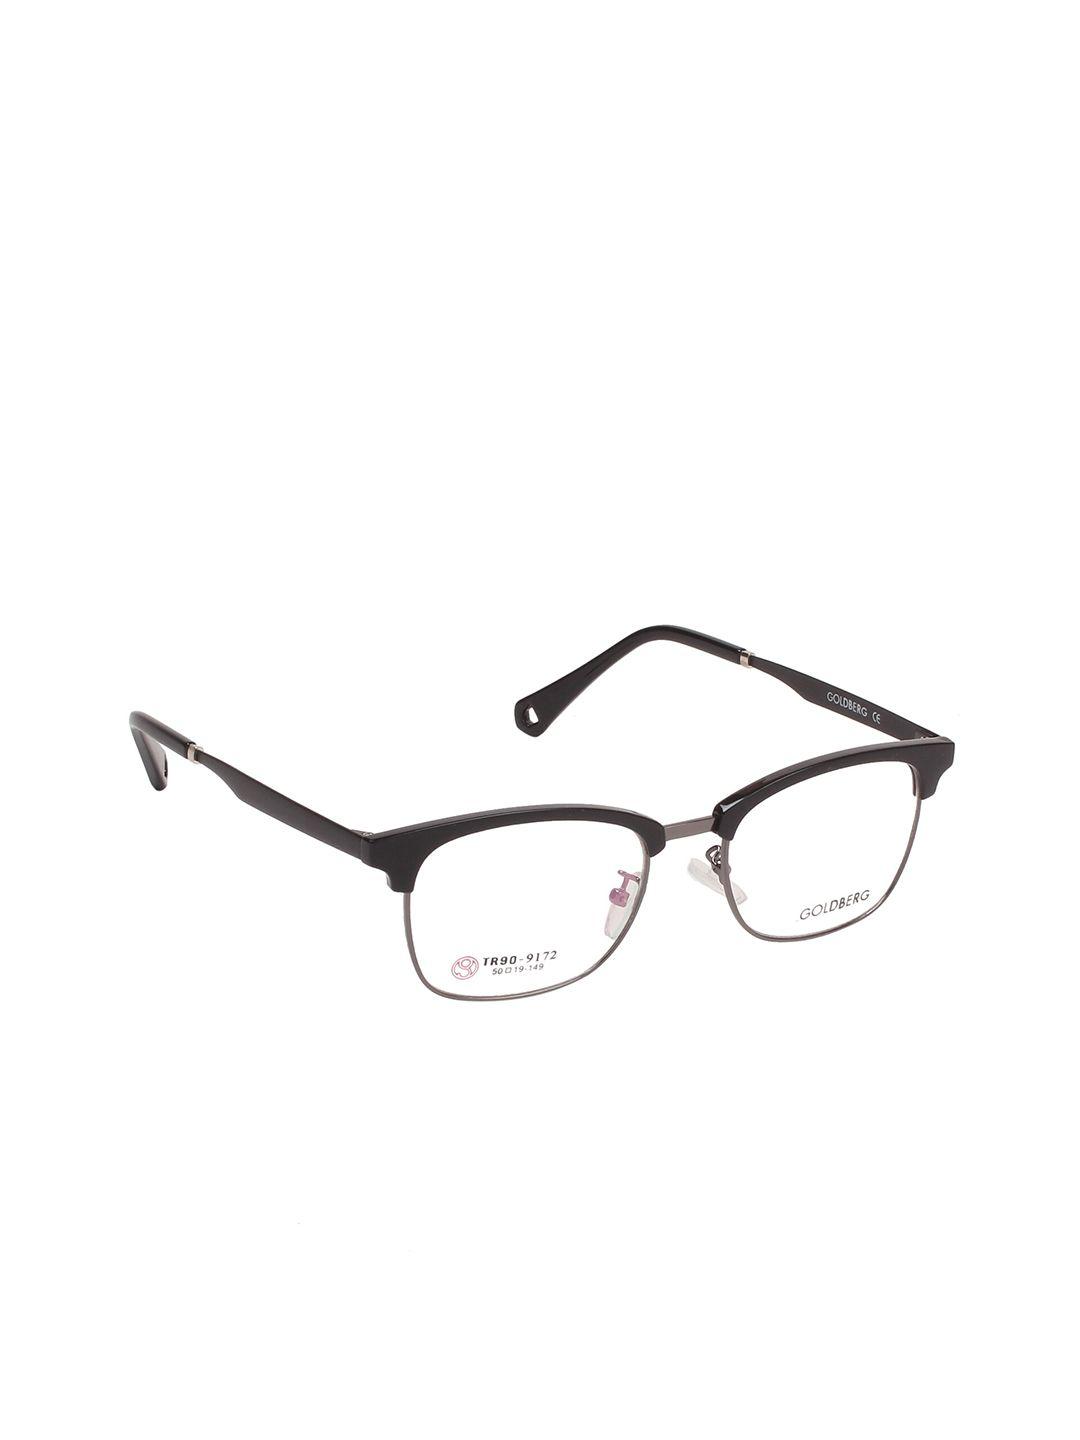 gold berg unisex black & transparent half rim browline frames eyeglasses